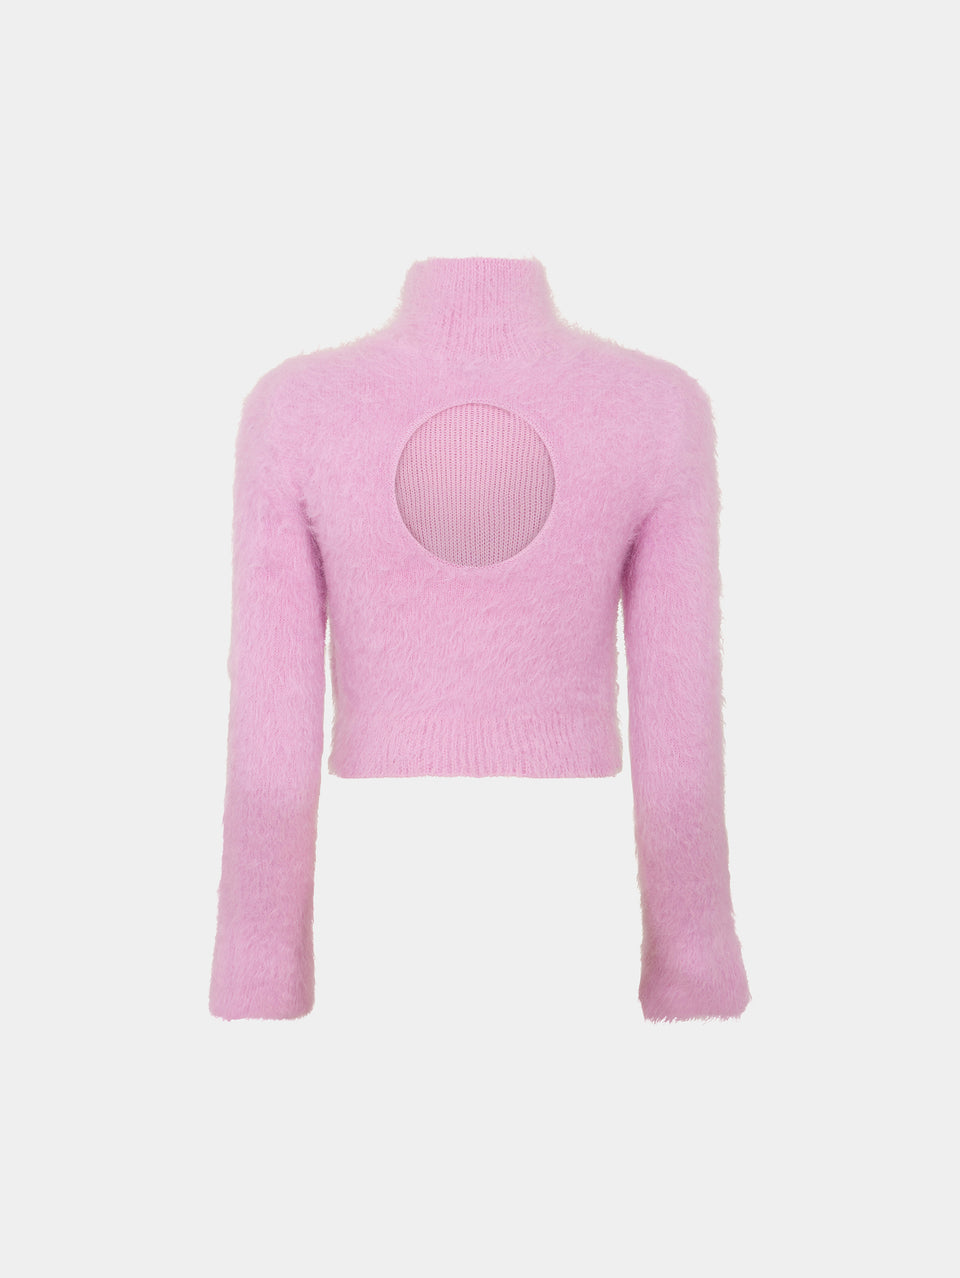 Pink Turtleneck sweater